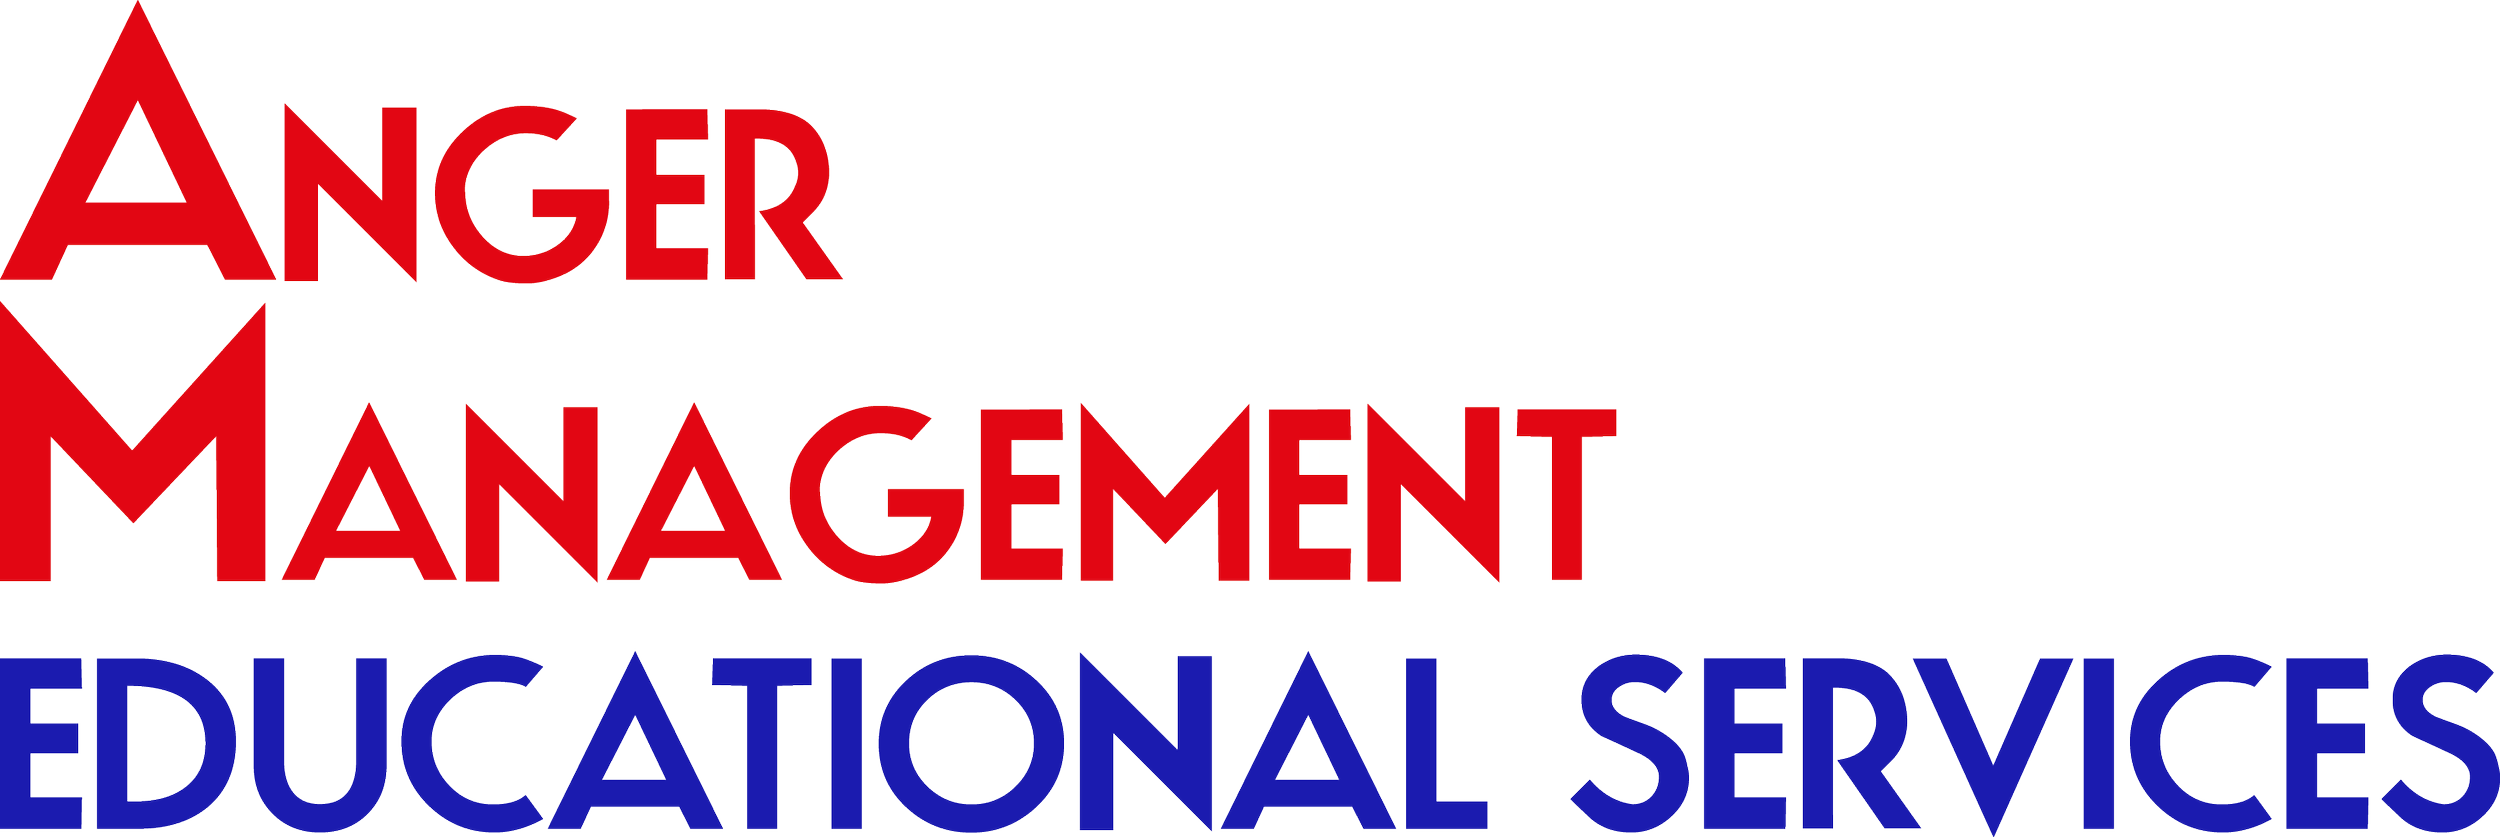 Anger_Management_Educational_Services_logo.png